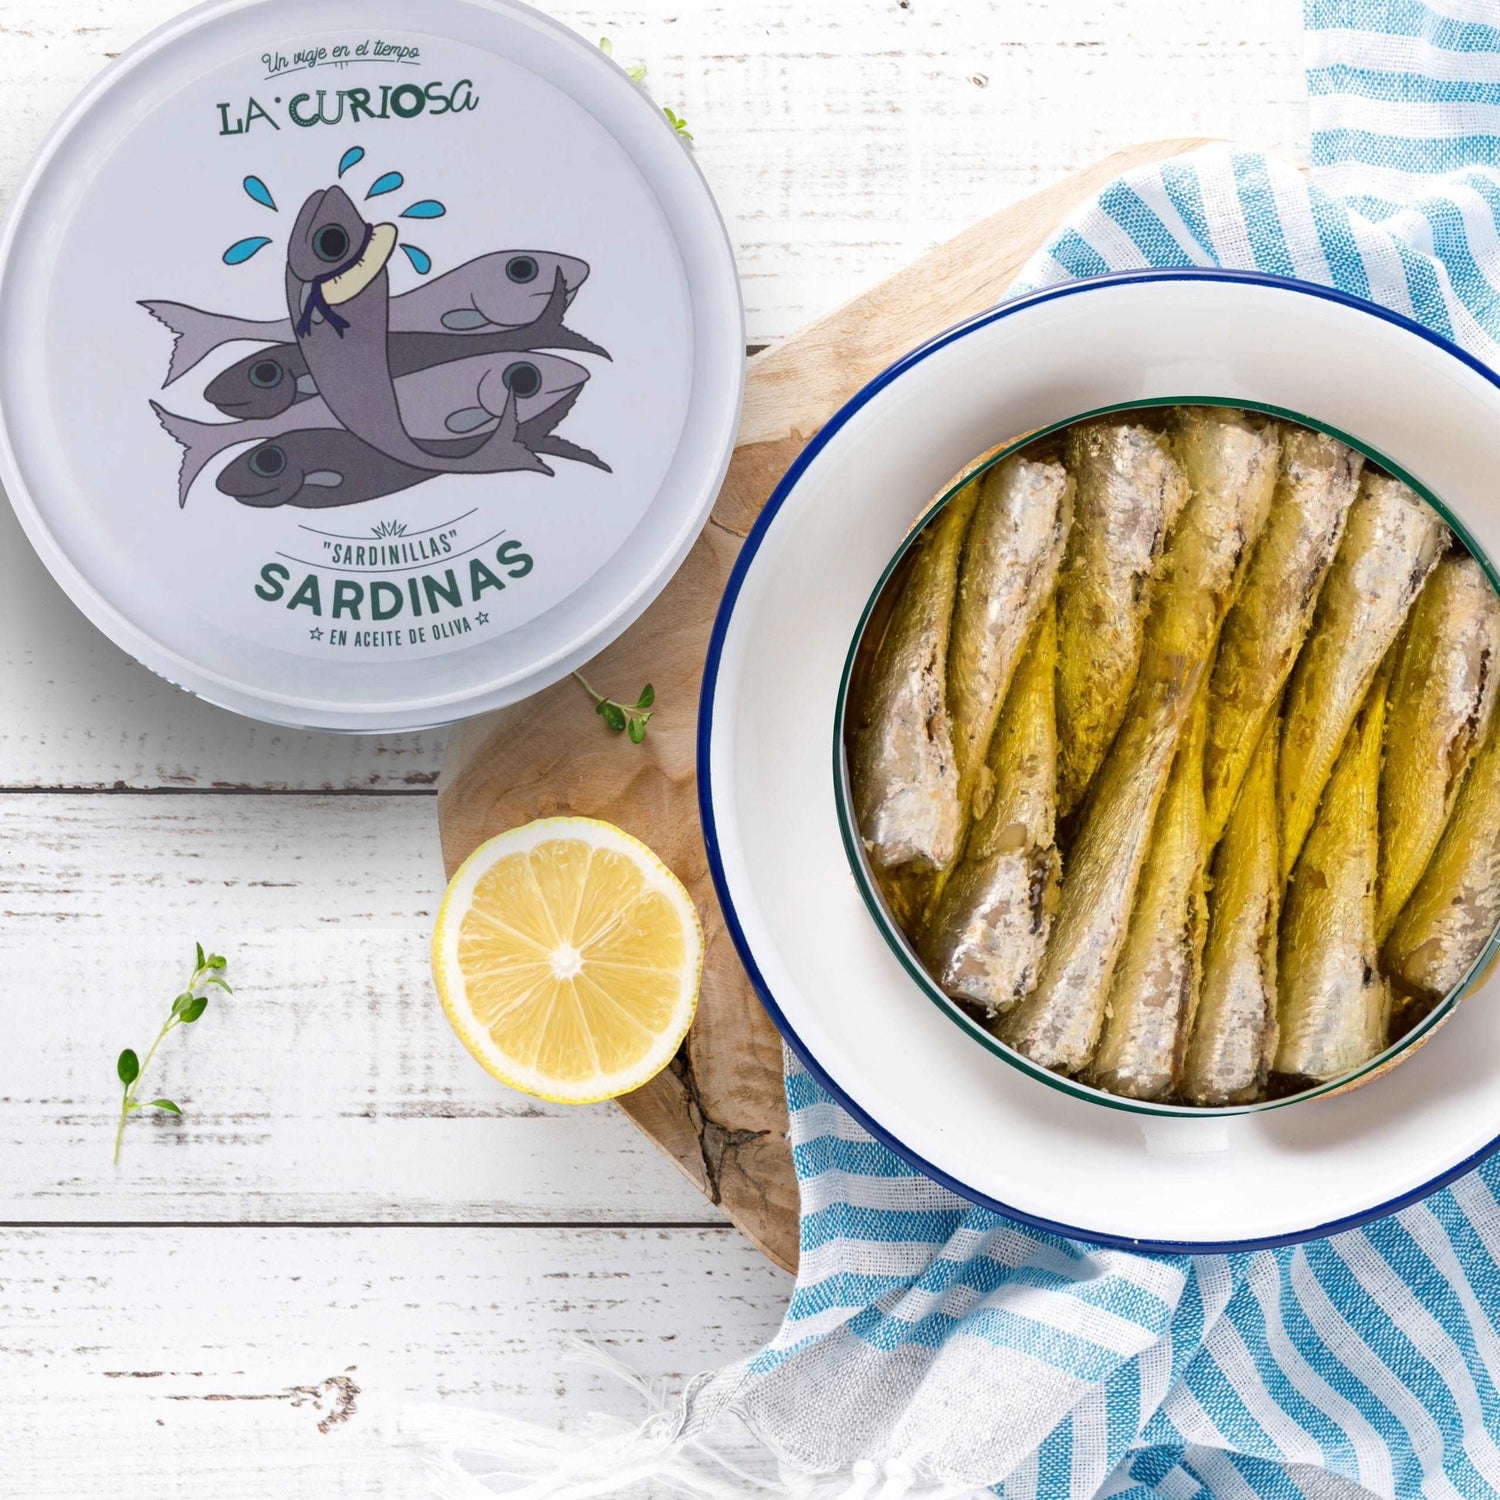 Small Sardines in Olive Oil by La Curiosa